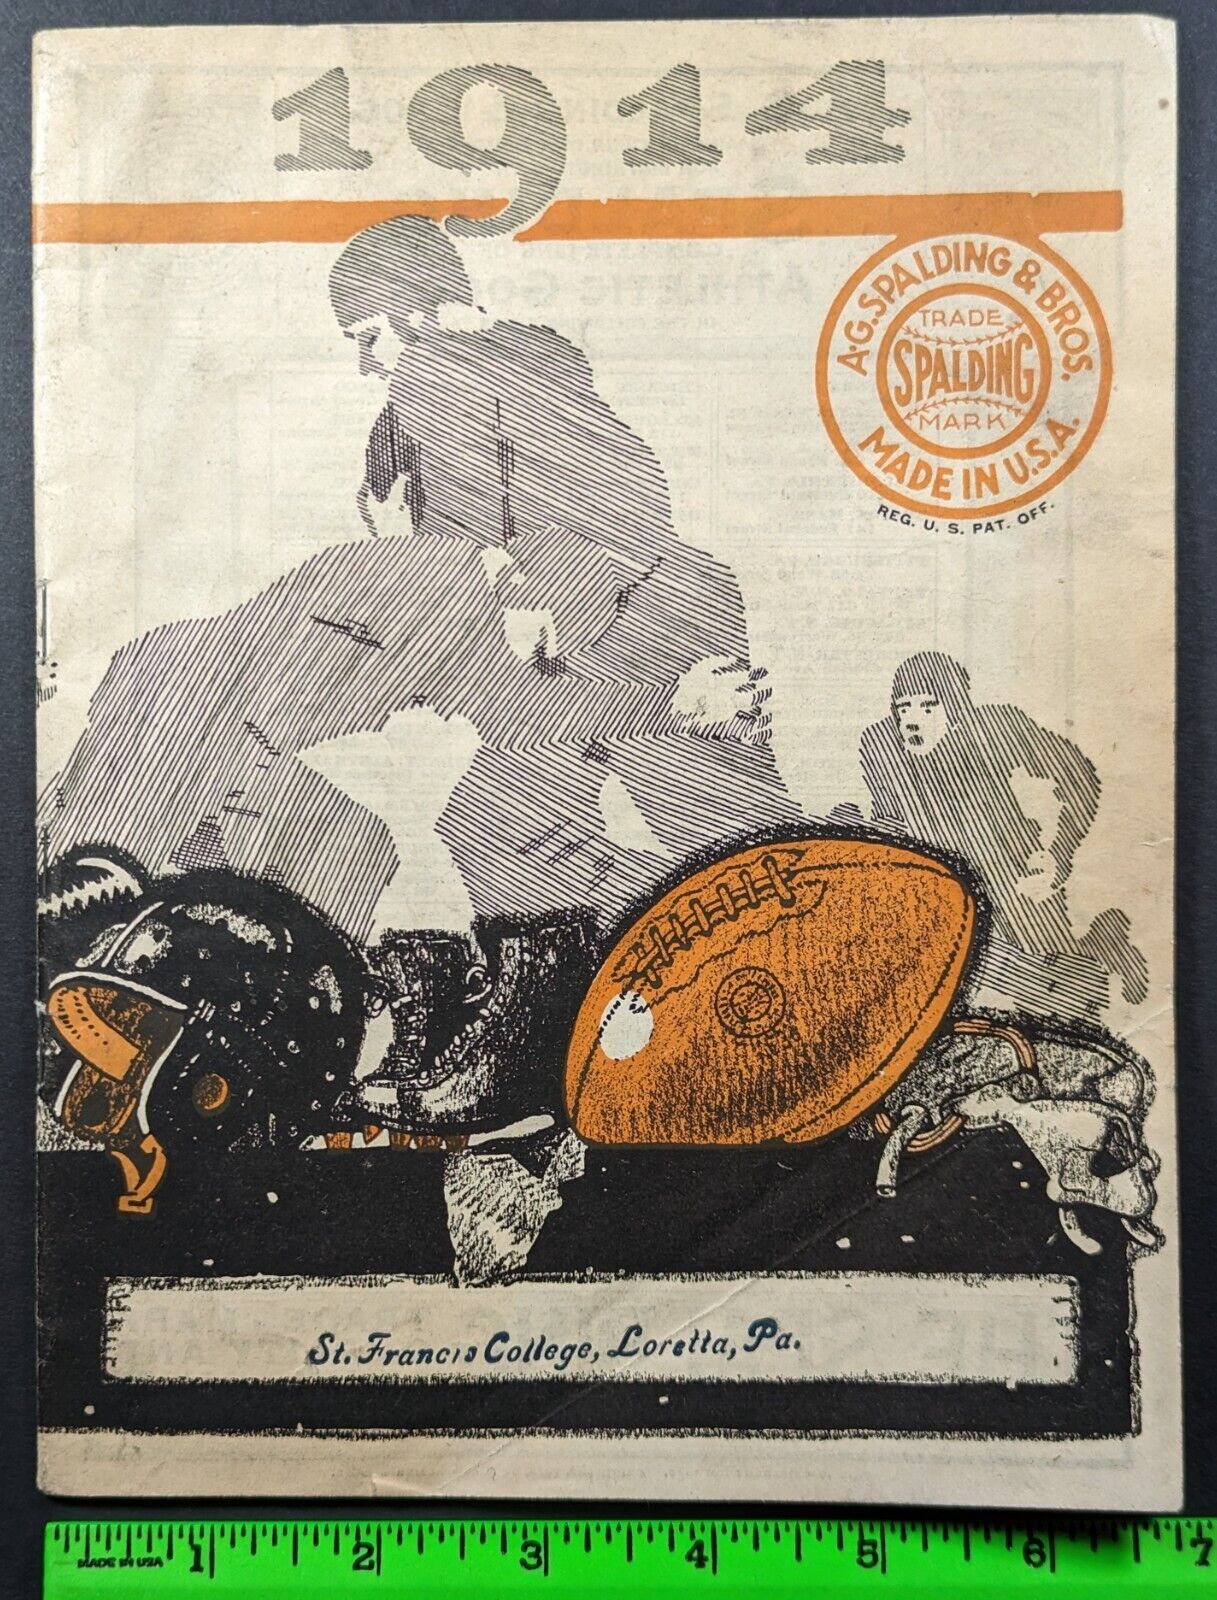 Vintage 1914 St Francis College Loretta PA Spalding Sports Catalog